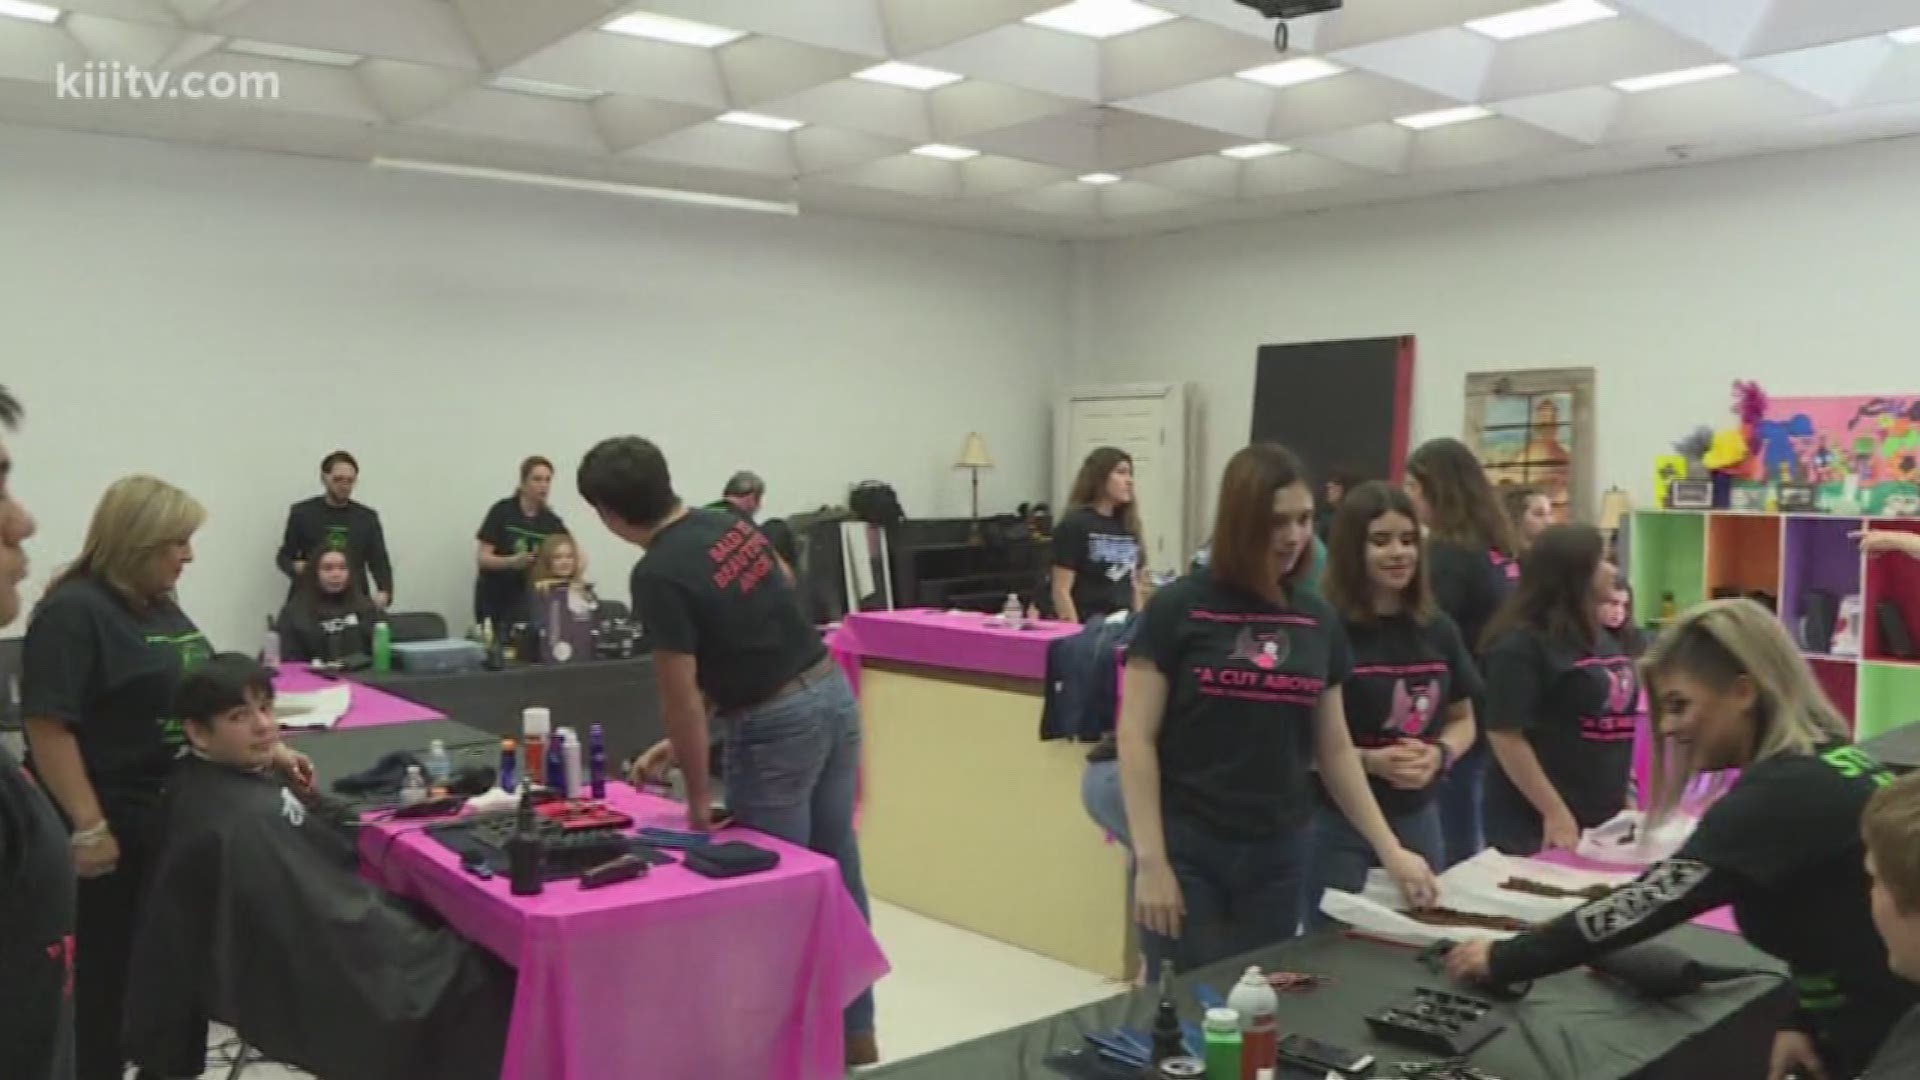 Students at Saint John Paul II High School donated their hair Tuesday for a good cause.